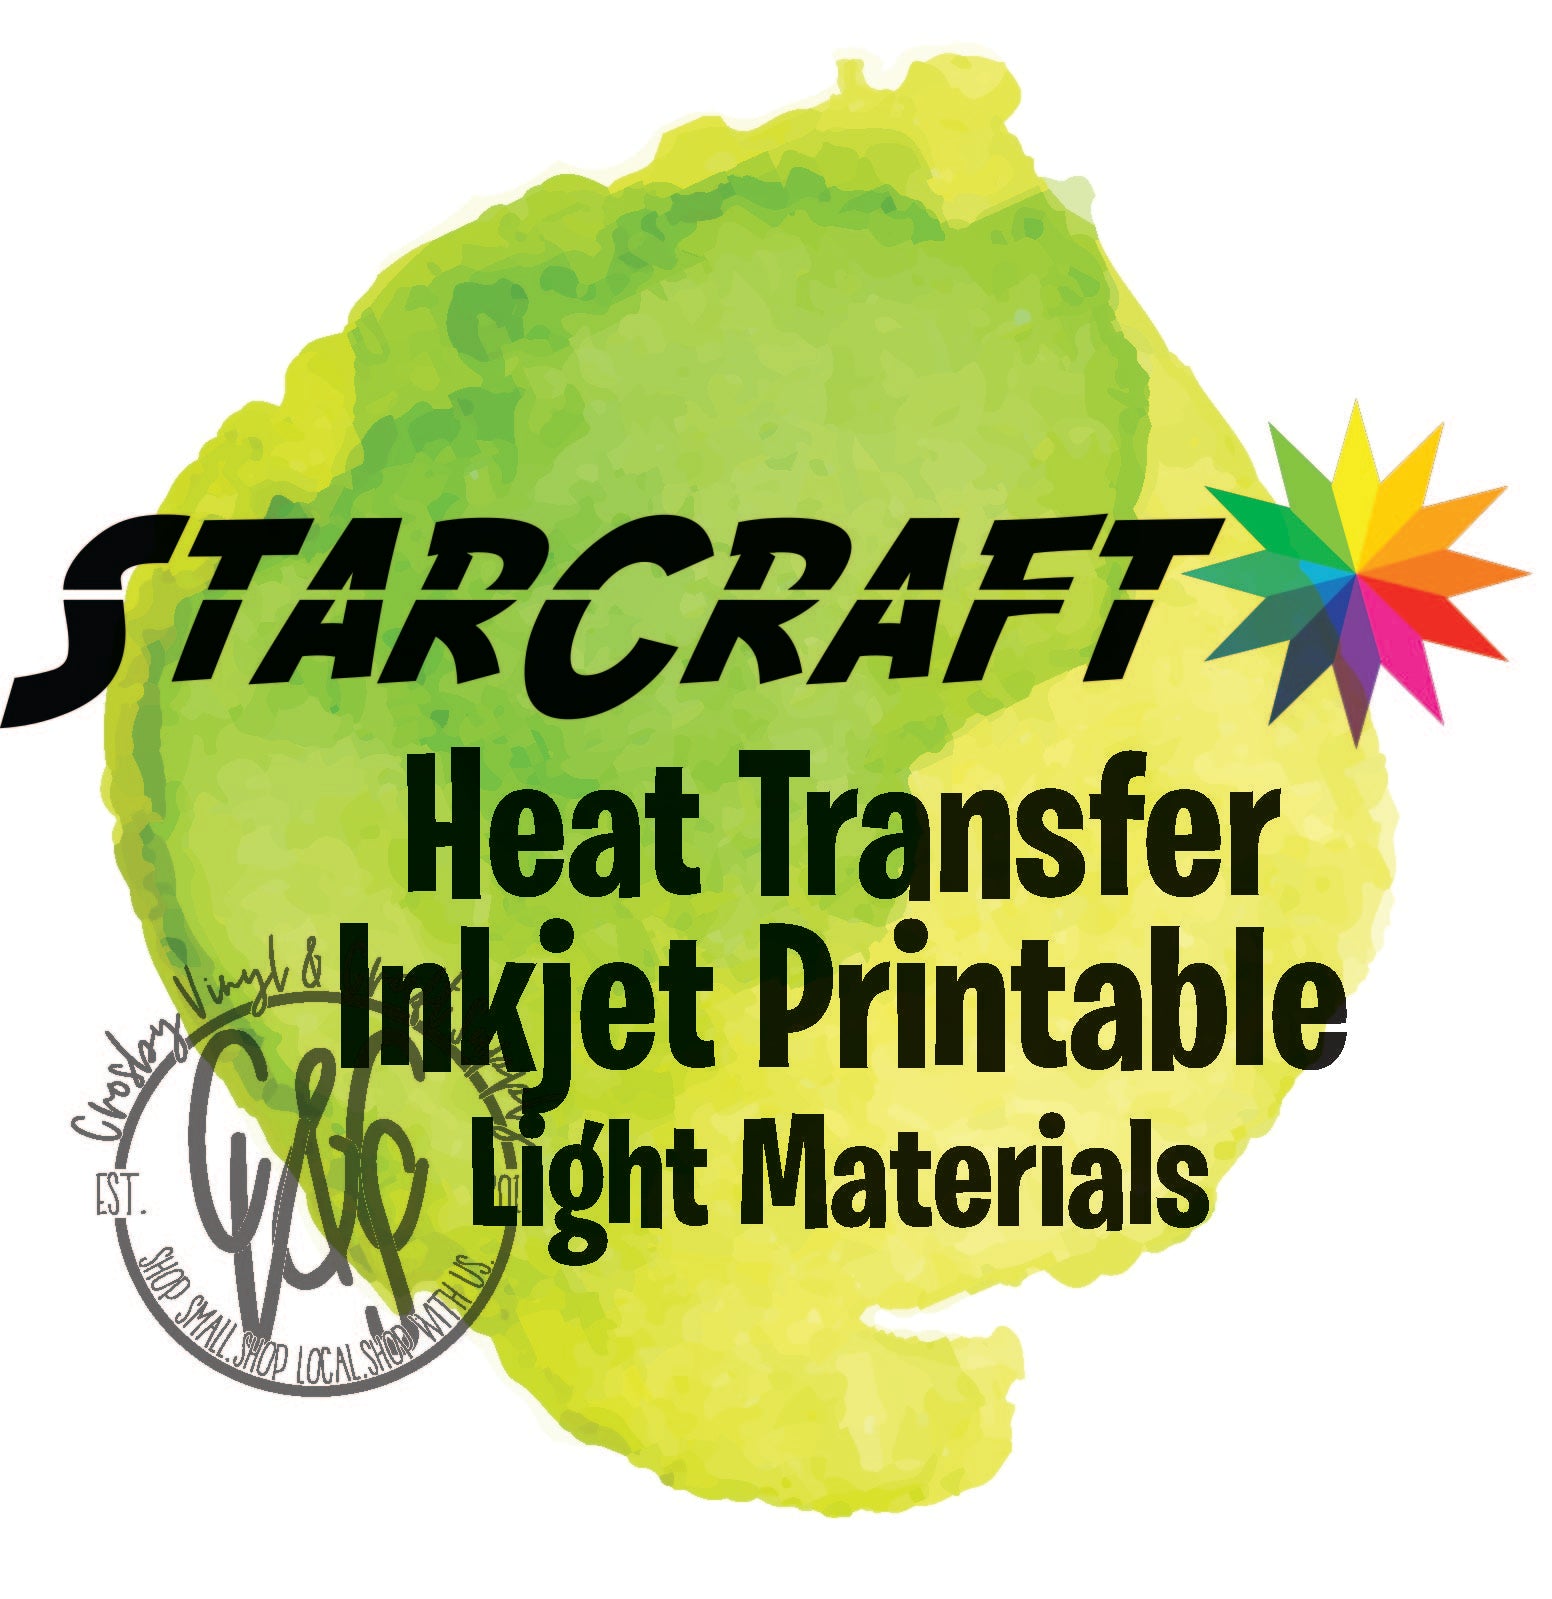  Starcraft Vinyl